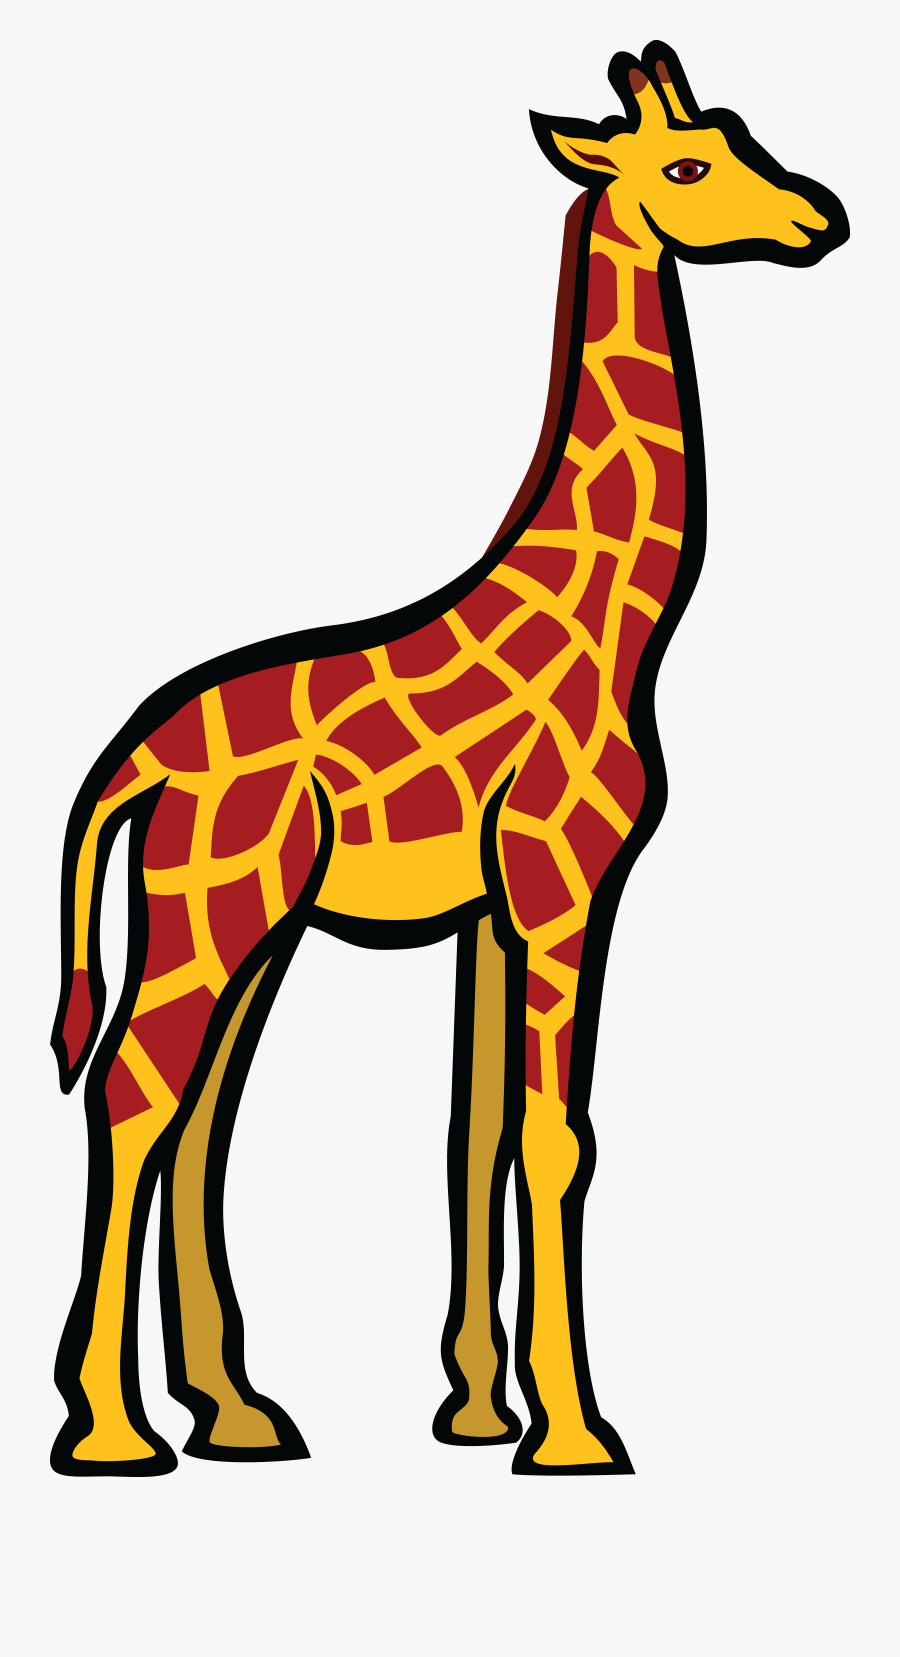 Free Clipart Of A Giraffe - Clipart Of A Giraffe, Transparent Clipart